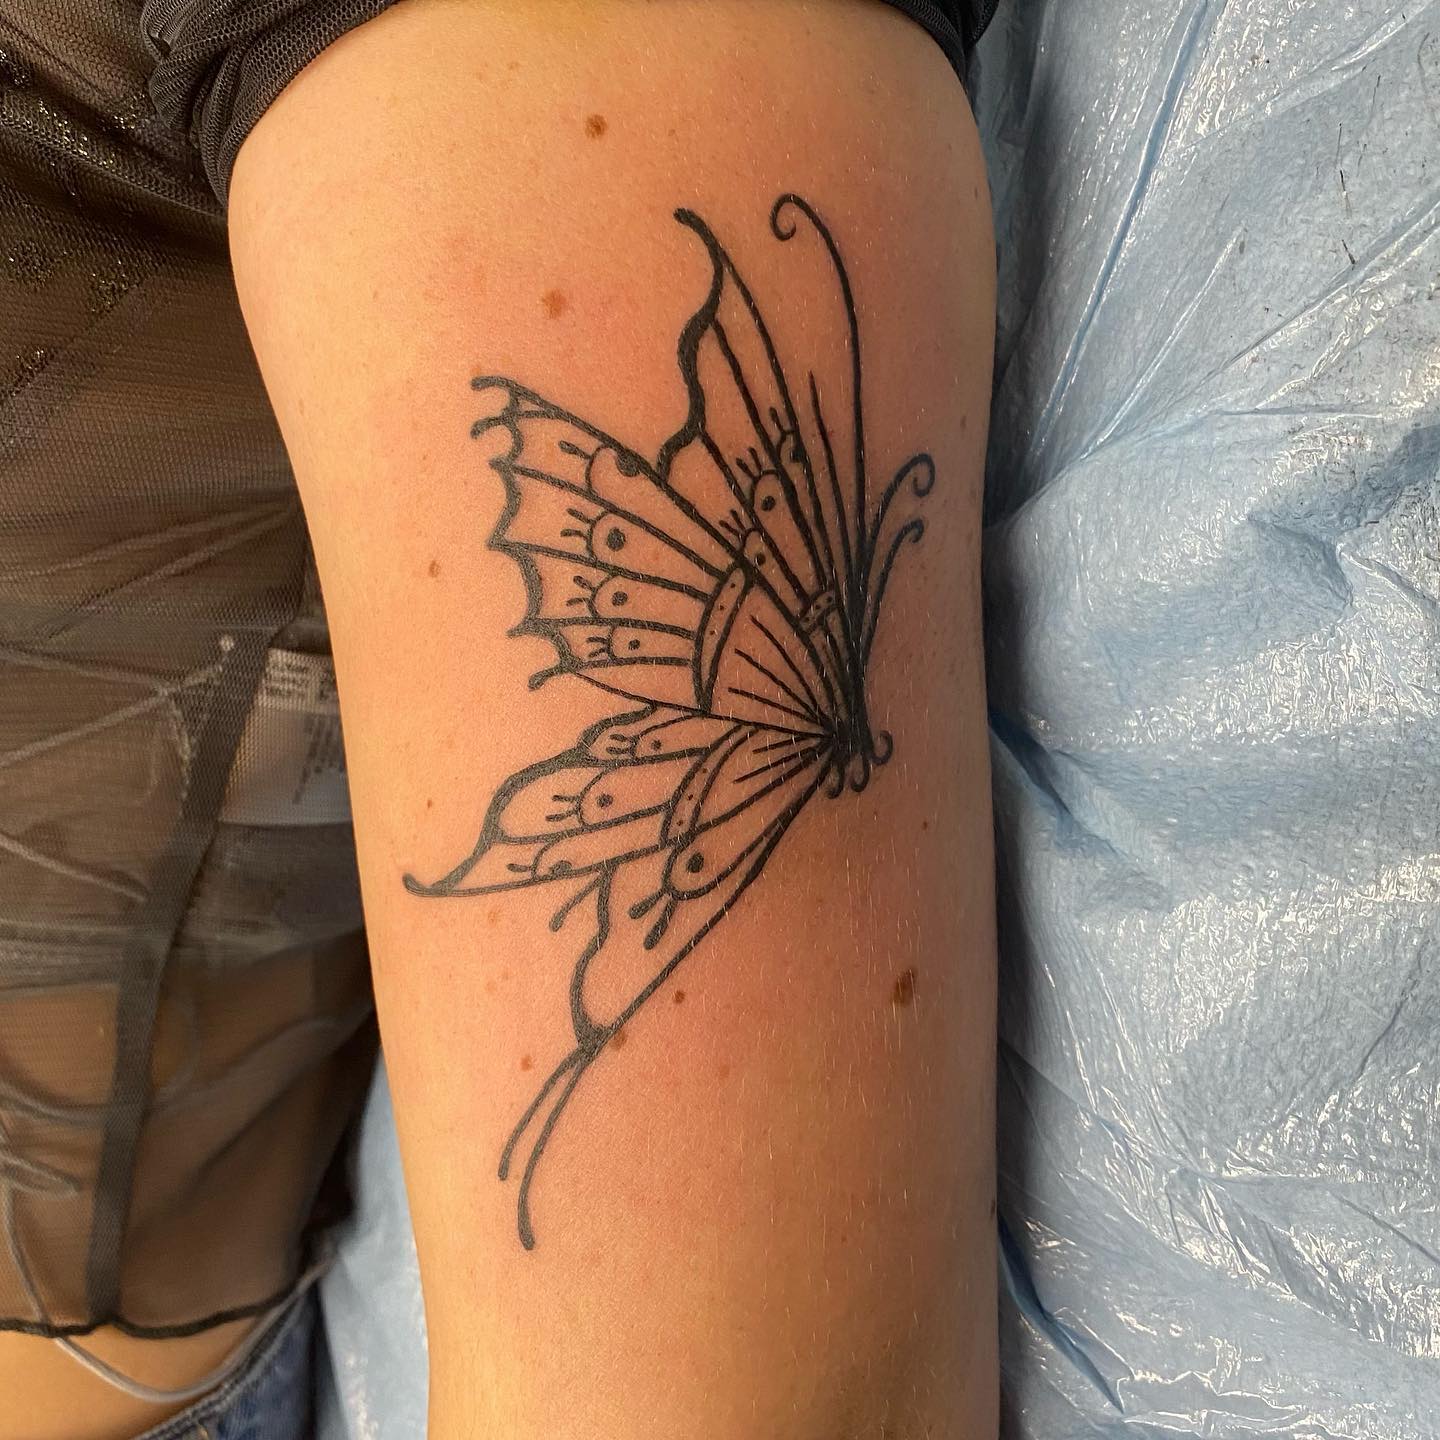 Tatuaje de contorno de mariposa negra.